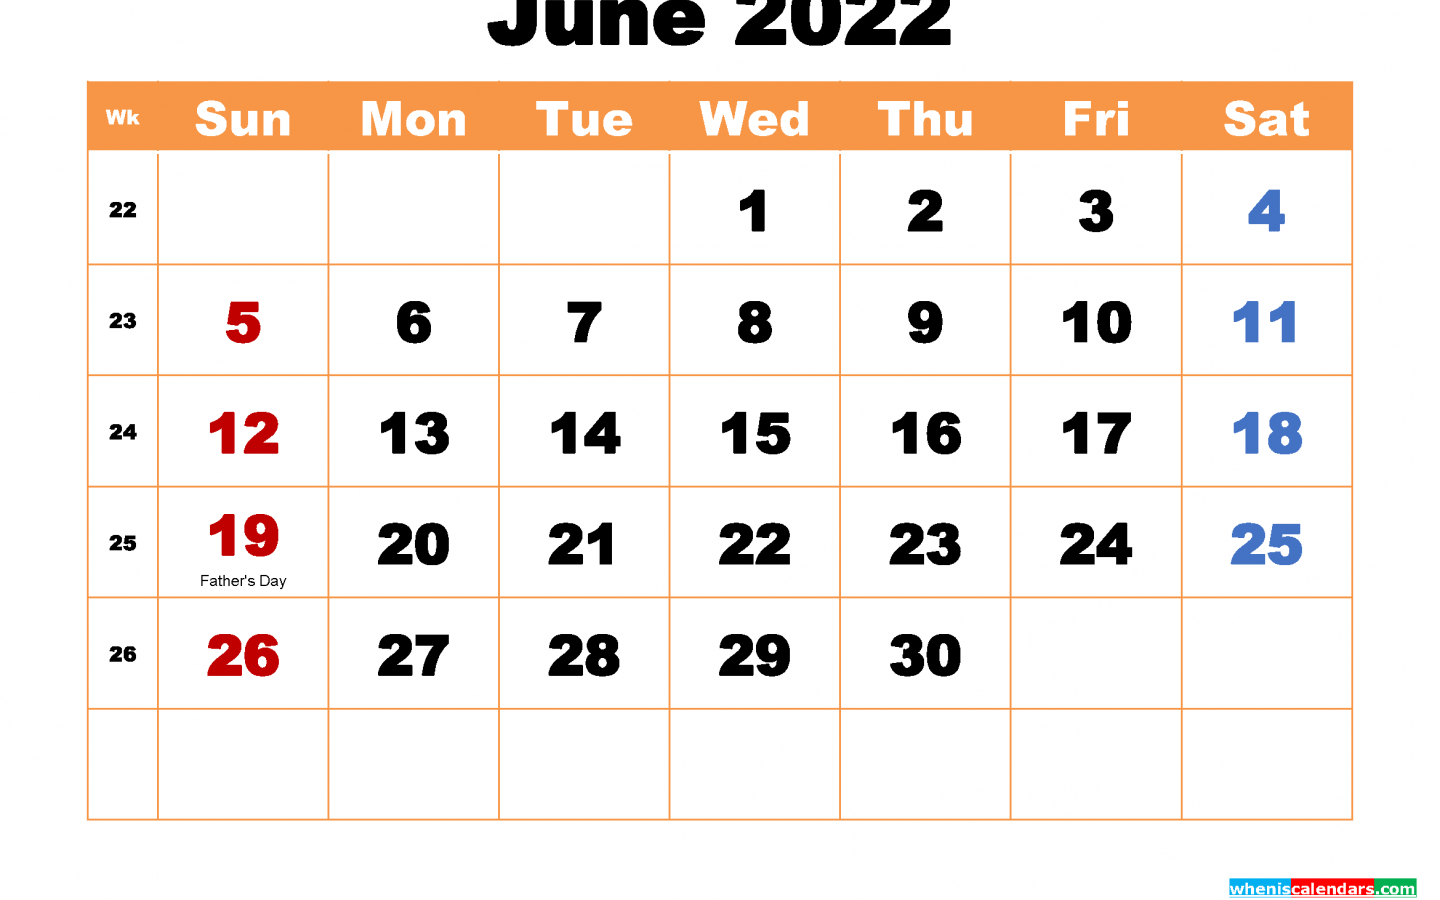 June 2022 Calendar Wallpapers - Top Free June 2022 Calendar Backgrounds ...